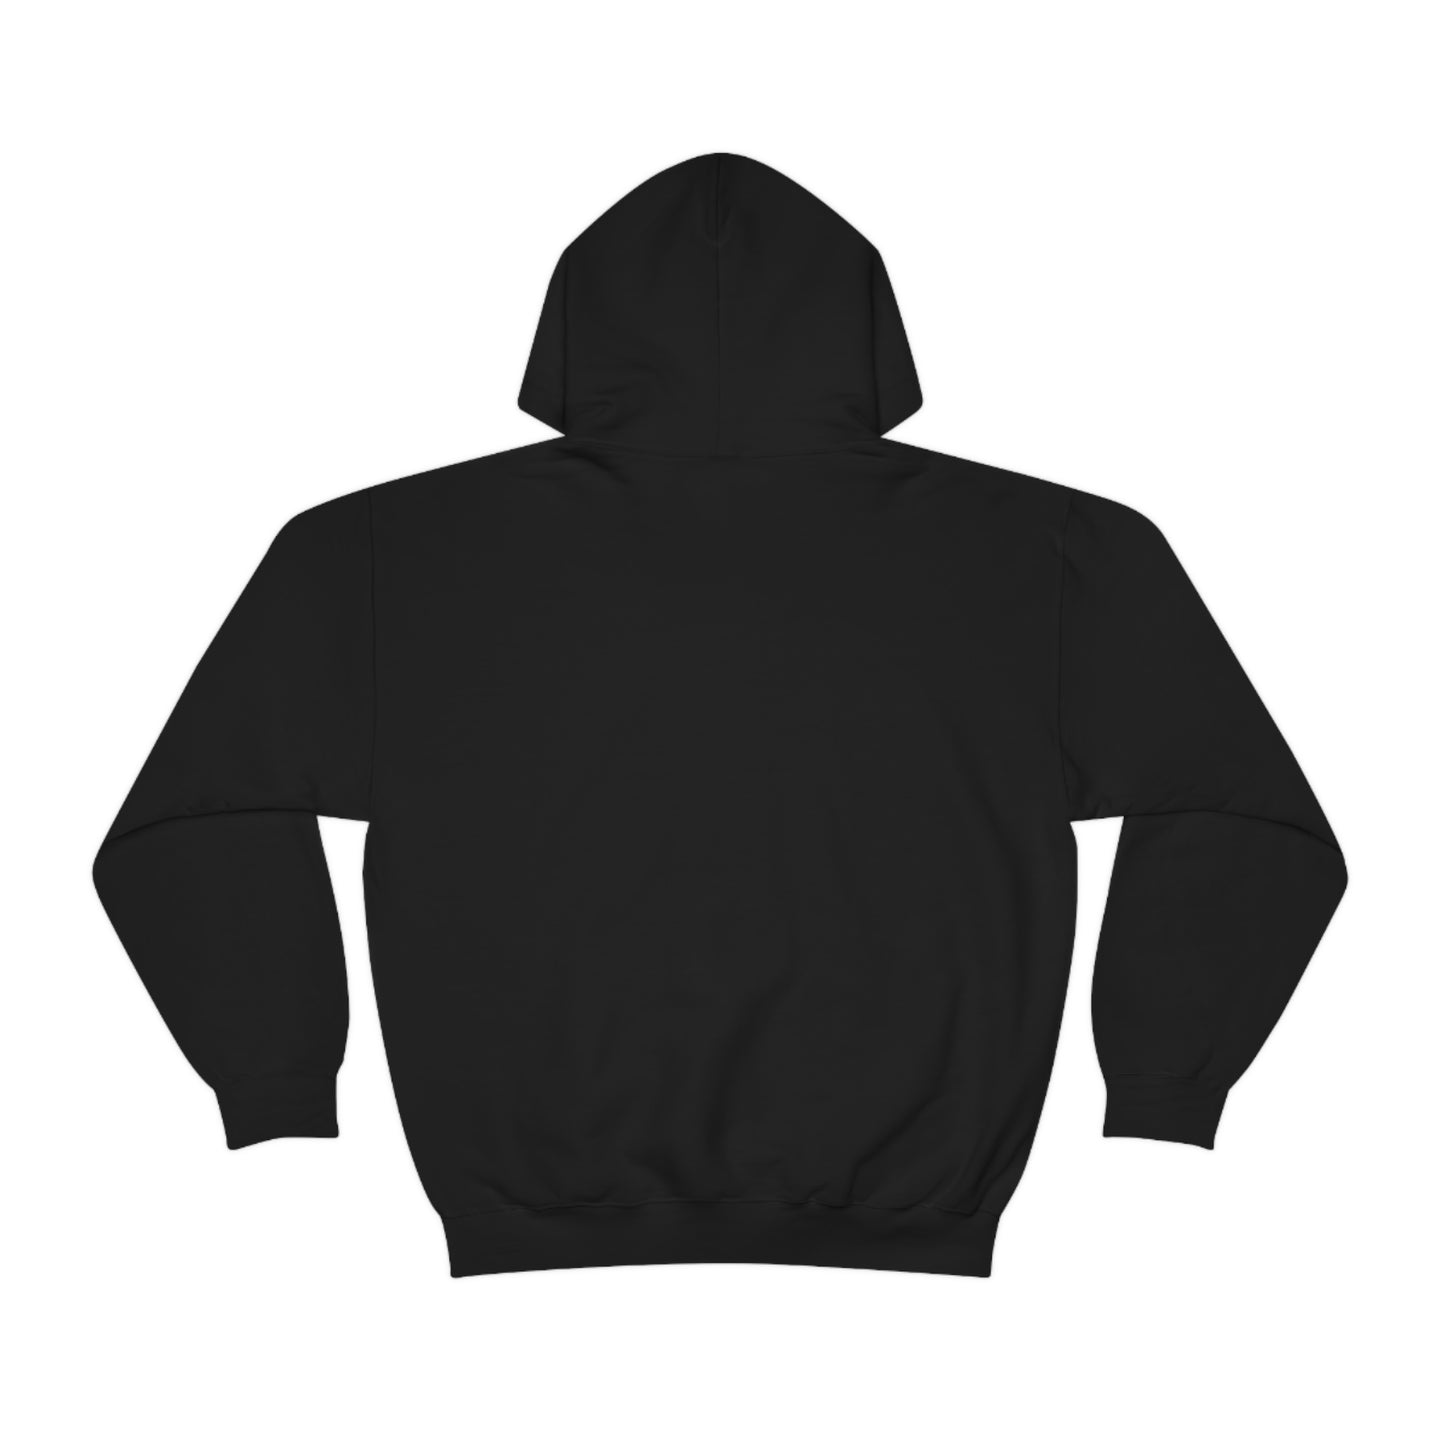 Unisex "Faux News" Hooded Sweatshirt